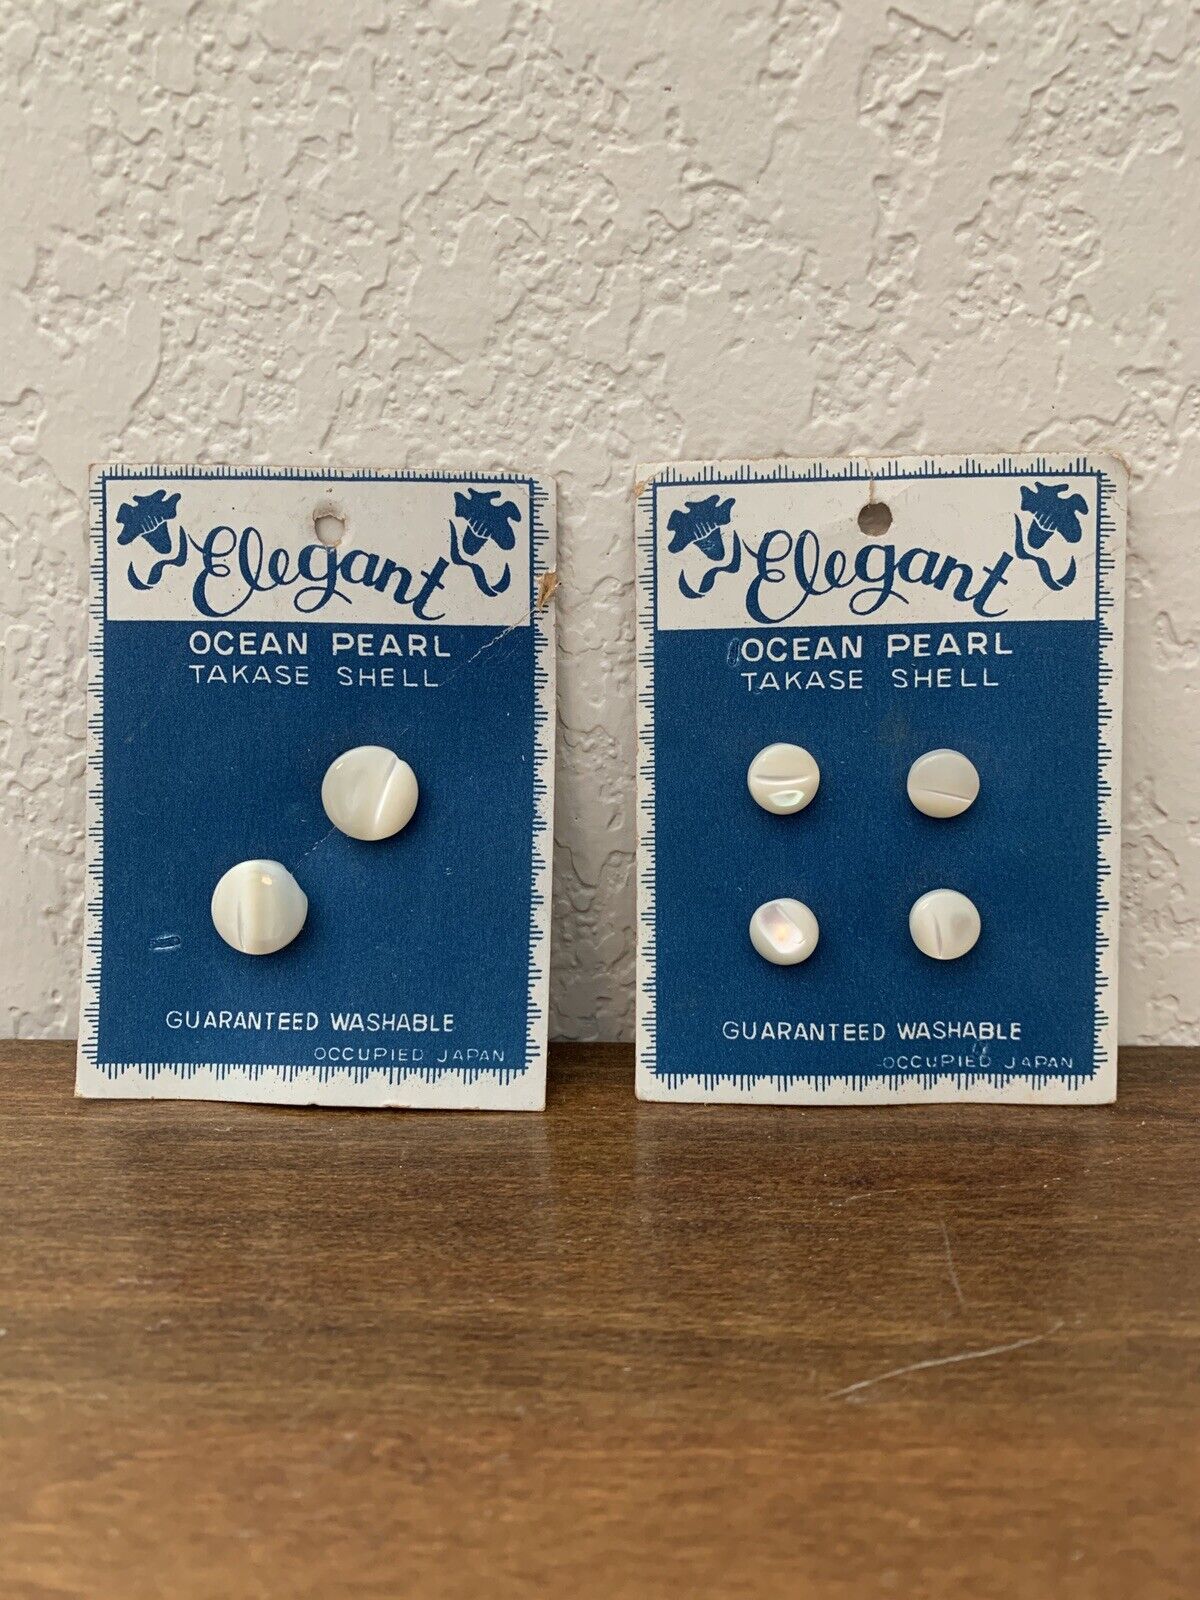 Elegant Ocean Pearl Takase shell buttons on original cards